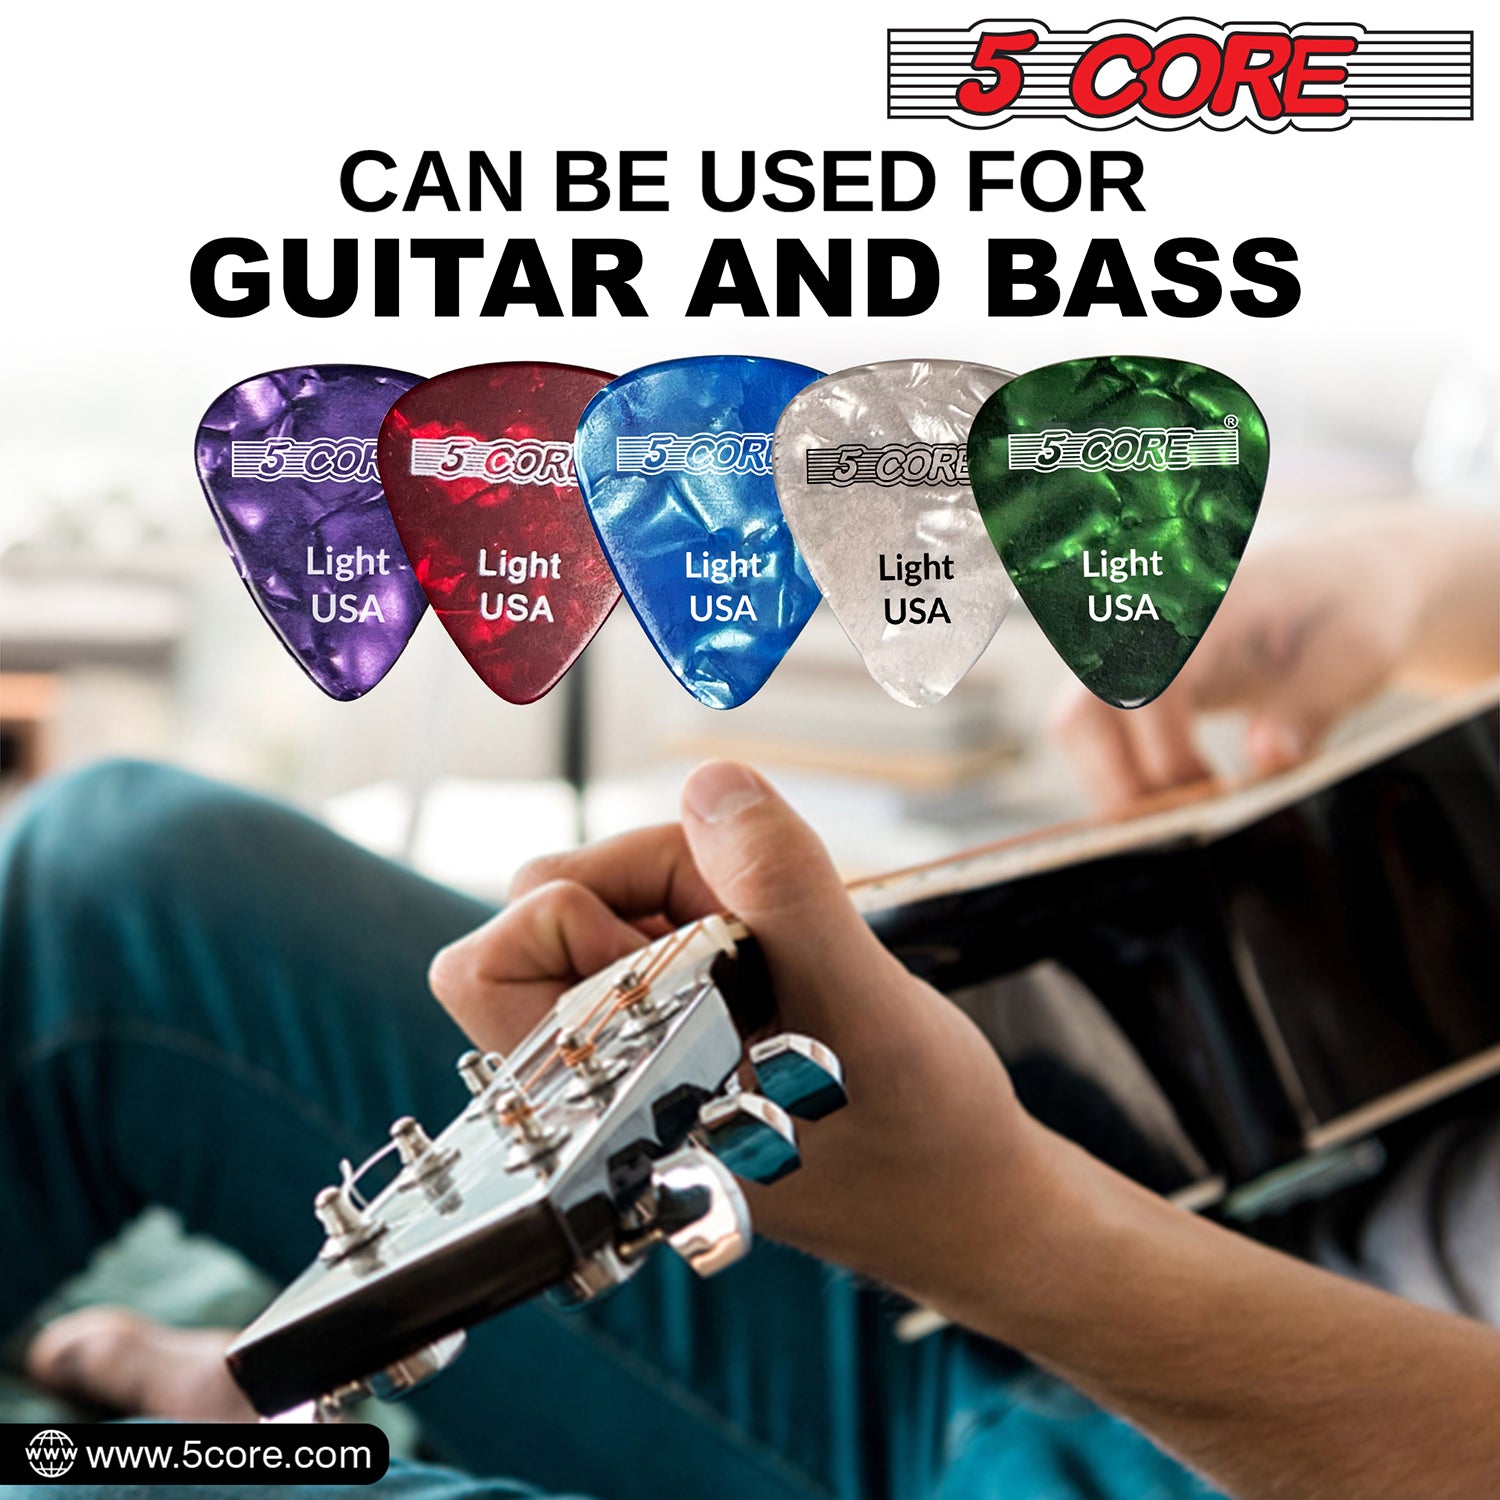 5 Core Celluloid Guitar Picks 12 Pack WhiteLight Gauge Plectrums for Acoustic Electric Bass Guitar